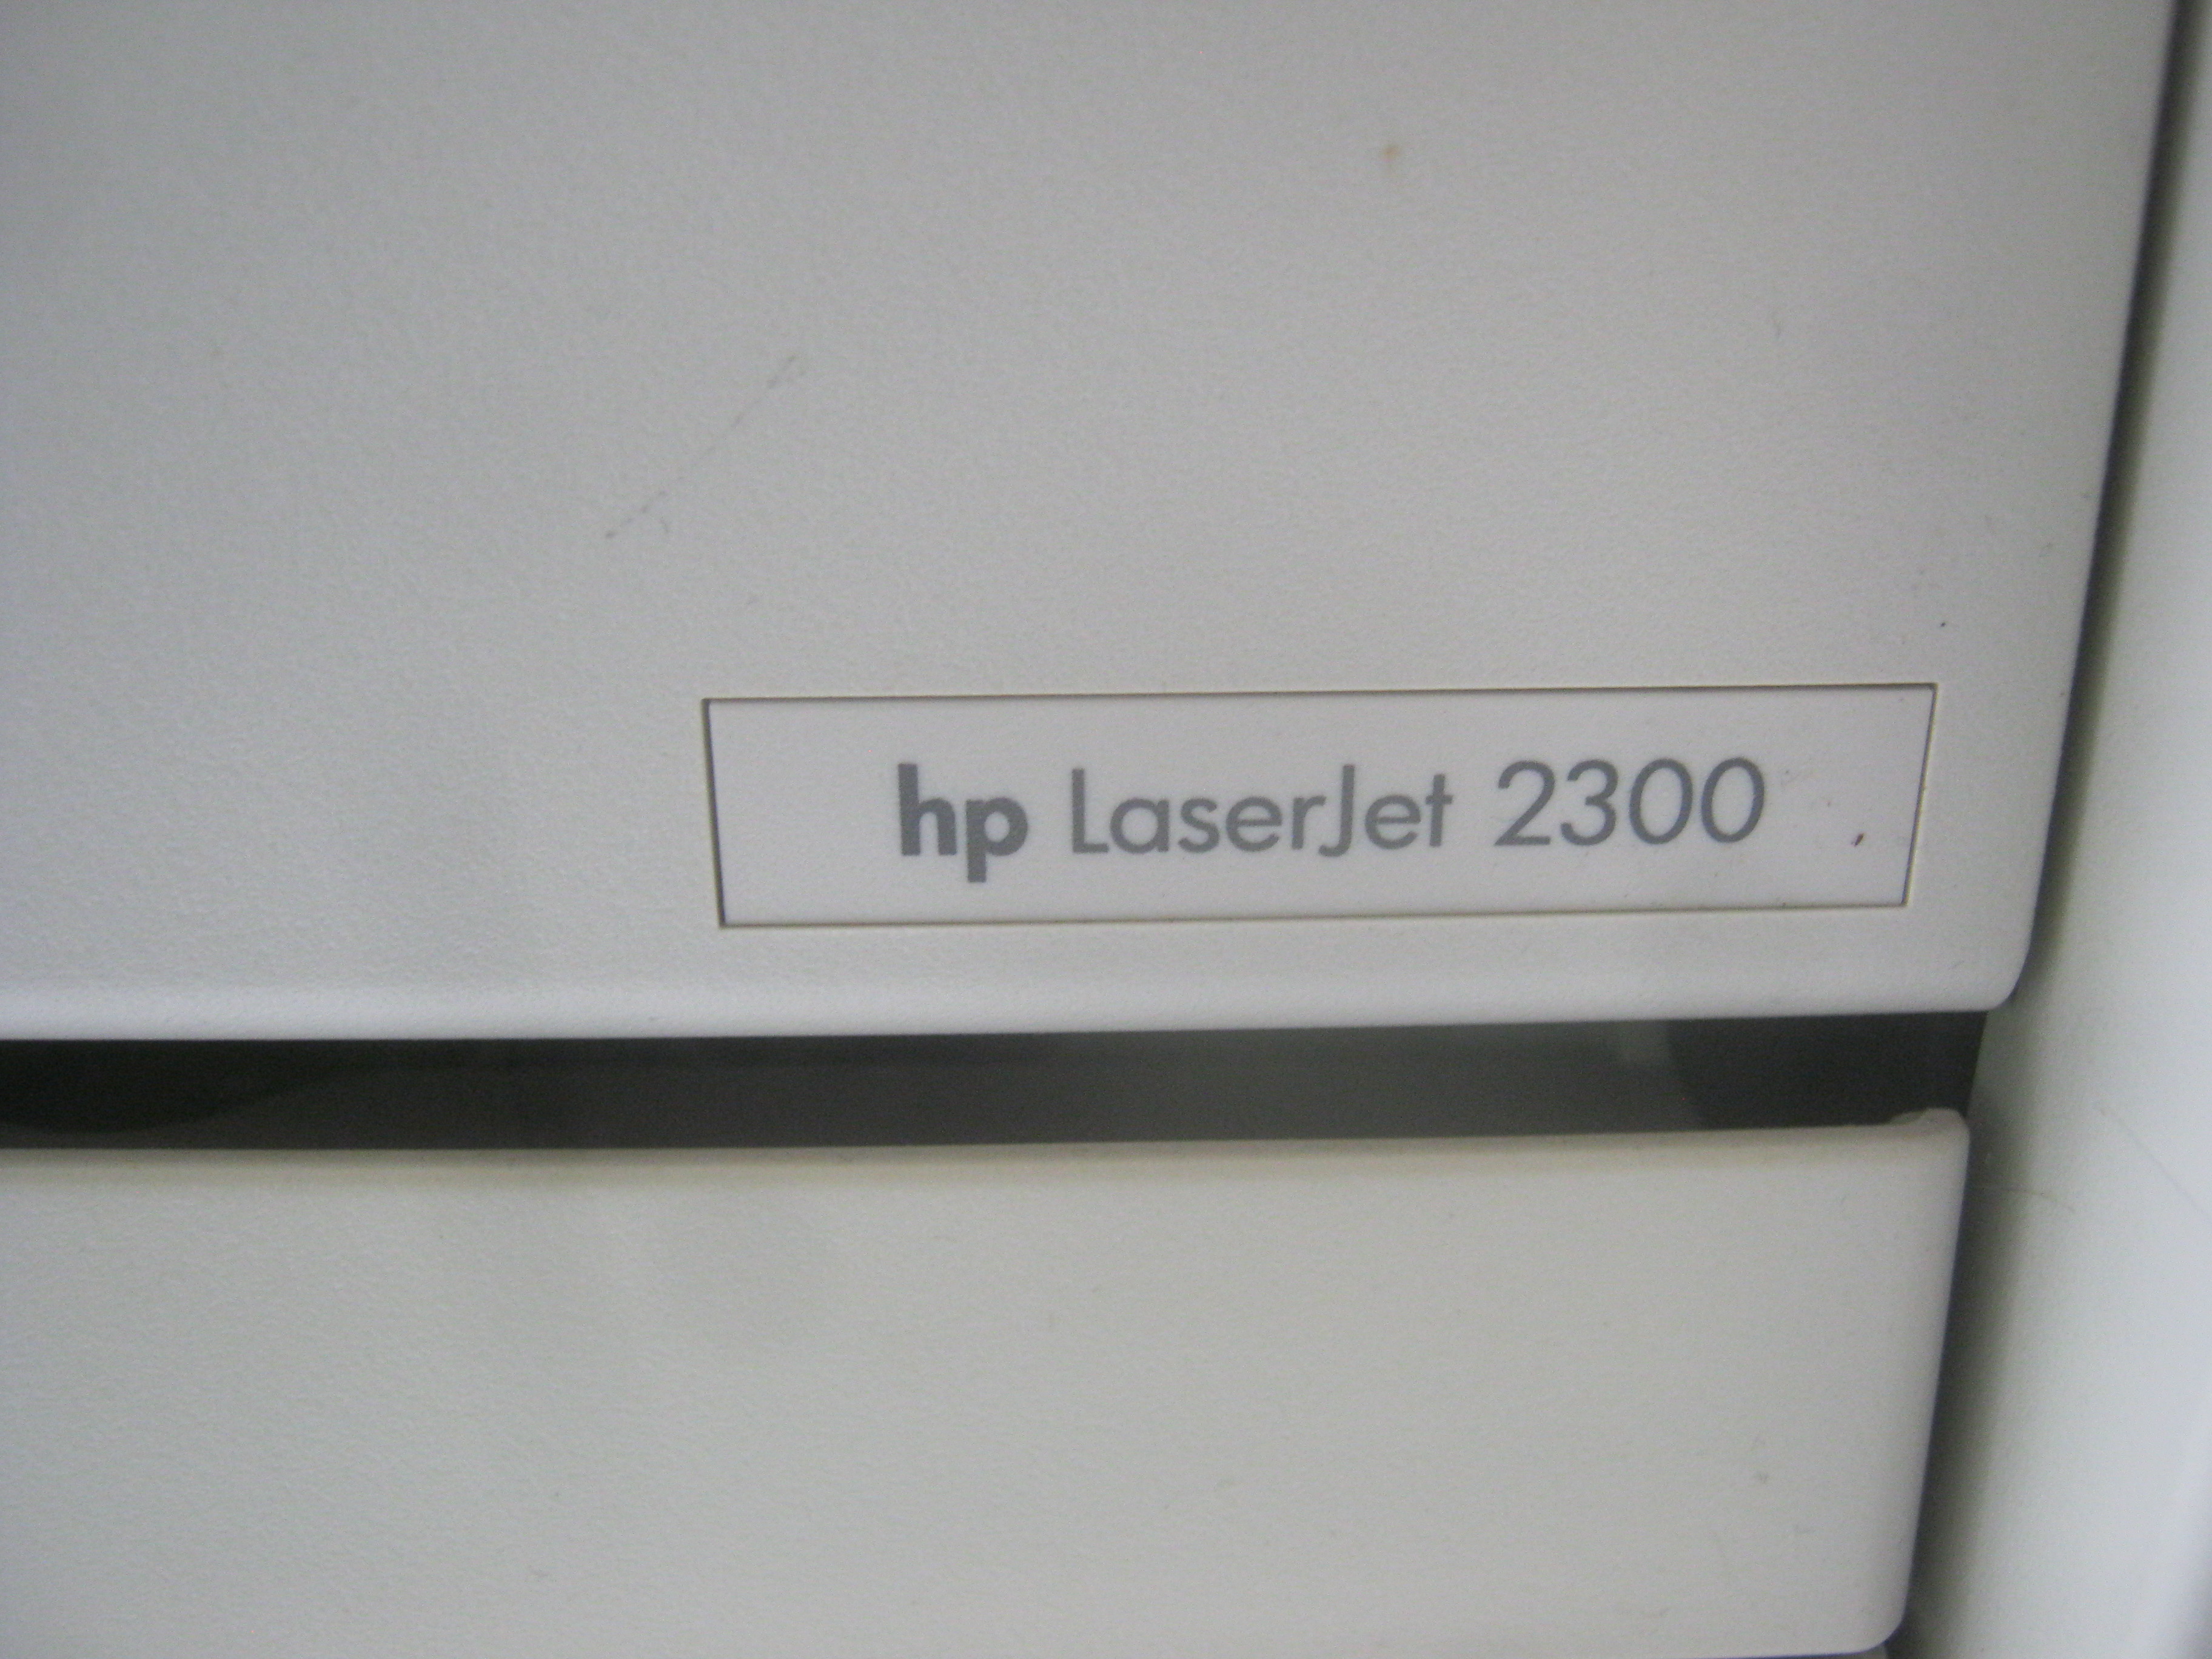 http://museodelcomputer.org/parts/hp/printers/laserjet2300/IMG_6949.JPG